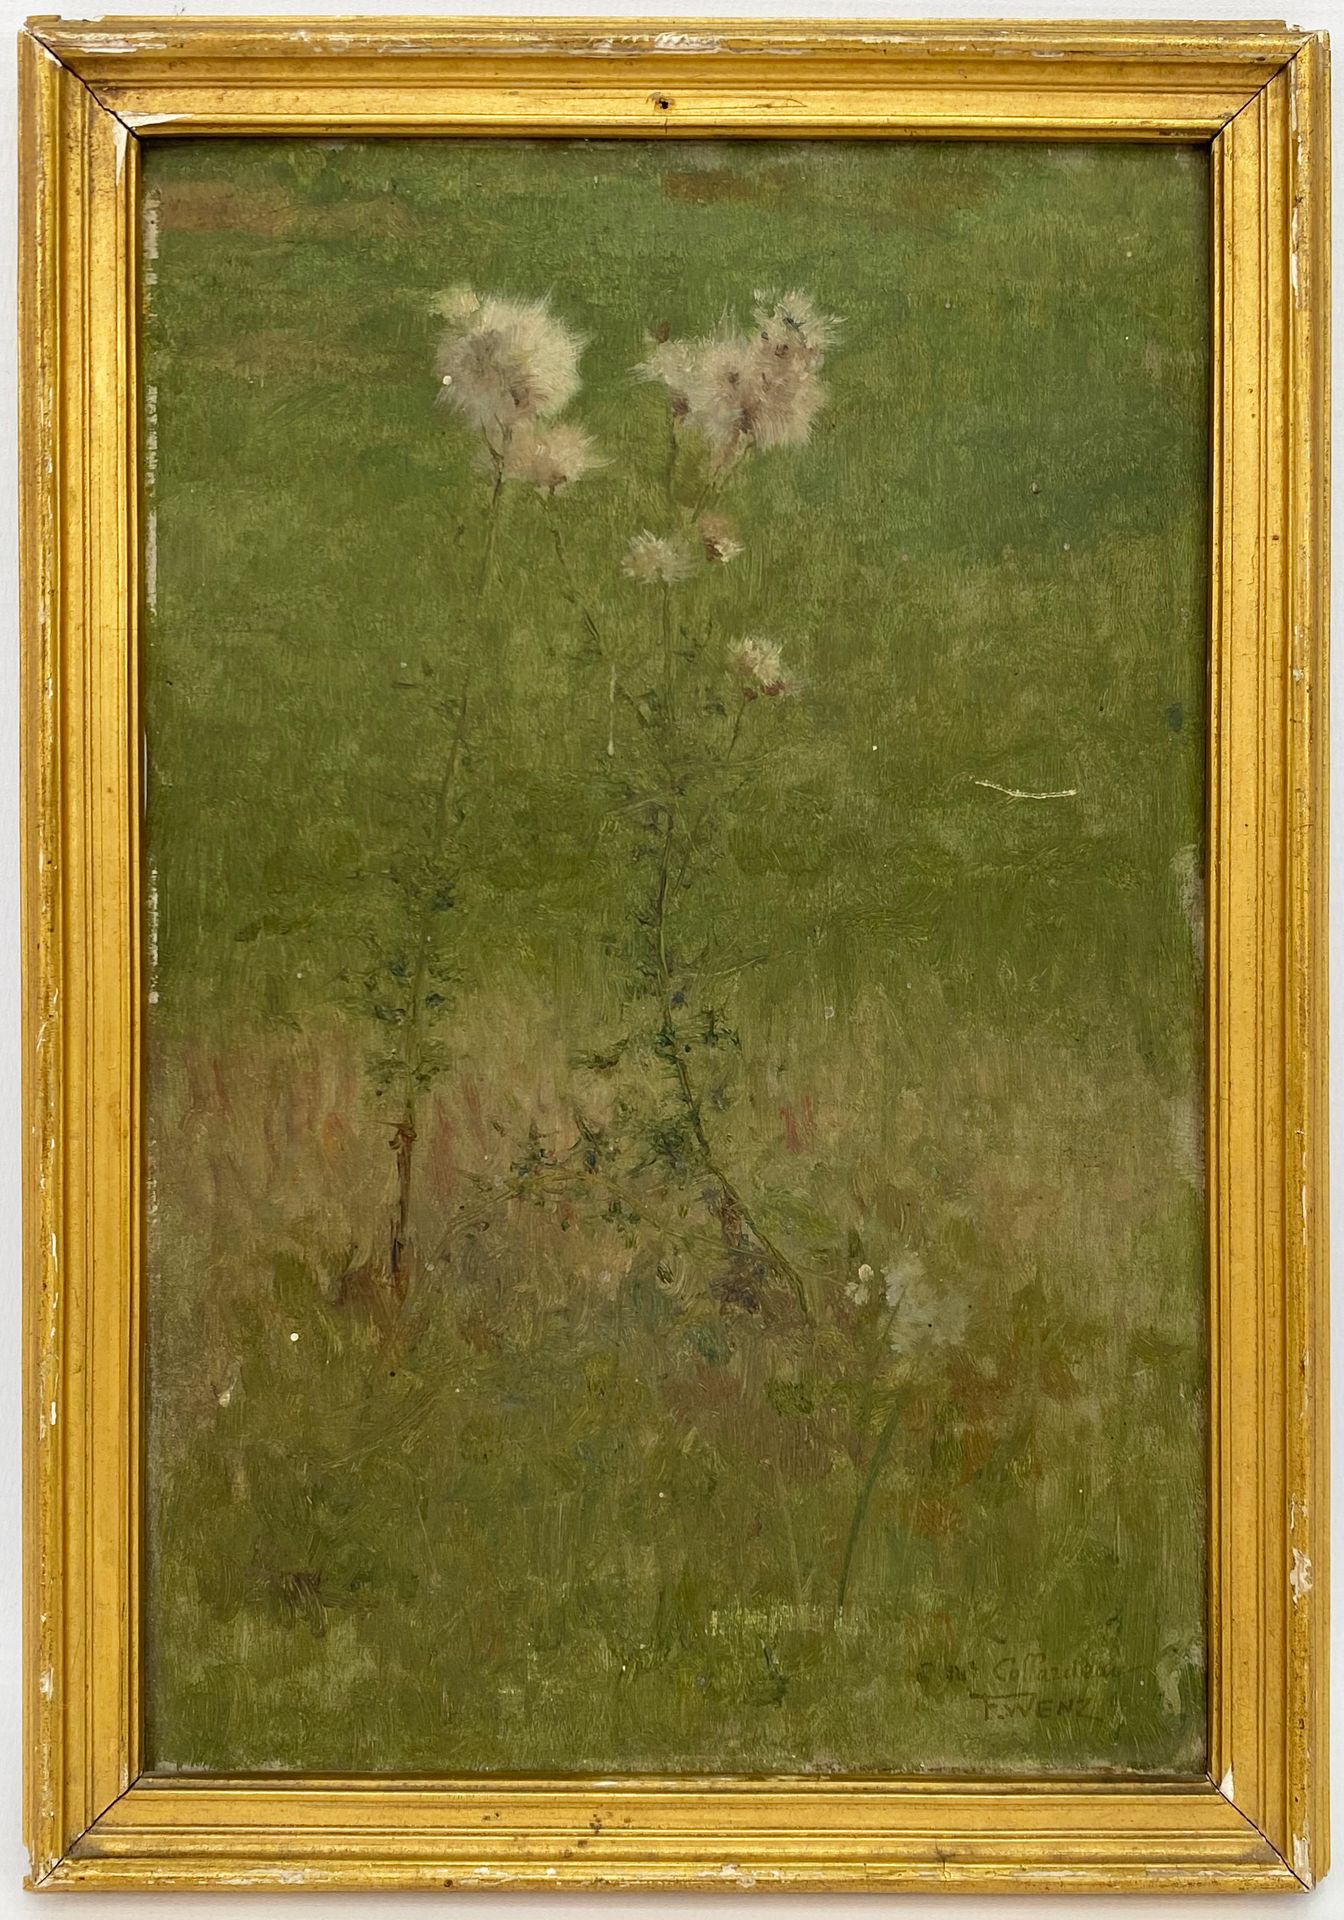 Null Frédéric WENZ (1865-1940)

Cardo en flor.

Óleo sobre tabla.

H. 24 cm

L.:&hellip;